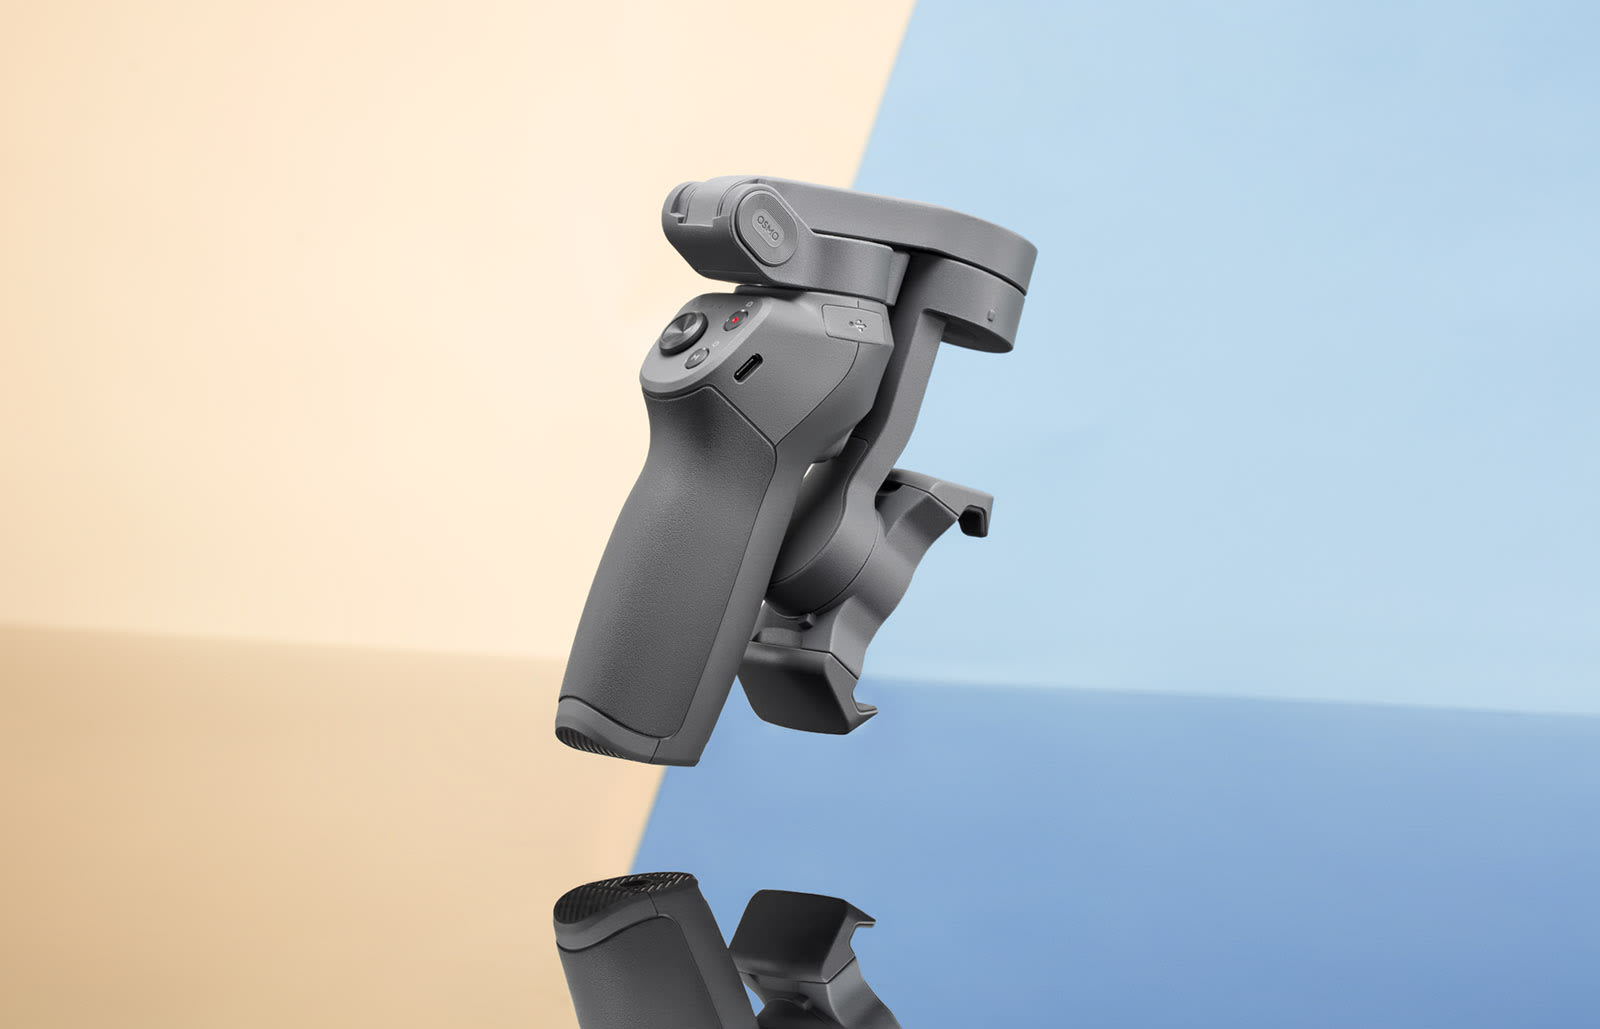 DJI's Osmo 3 smartphone gimbal has a travel-friendly folding design